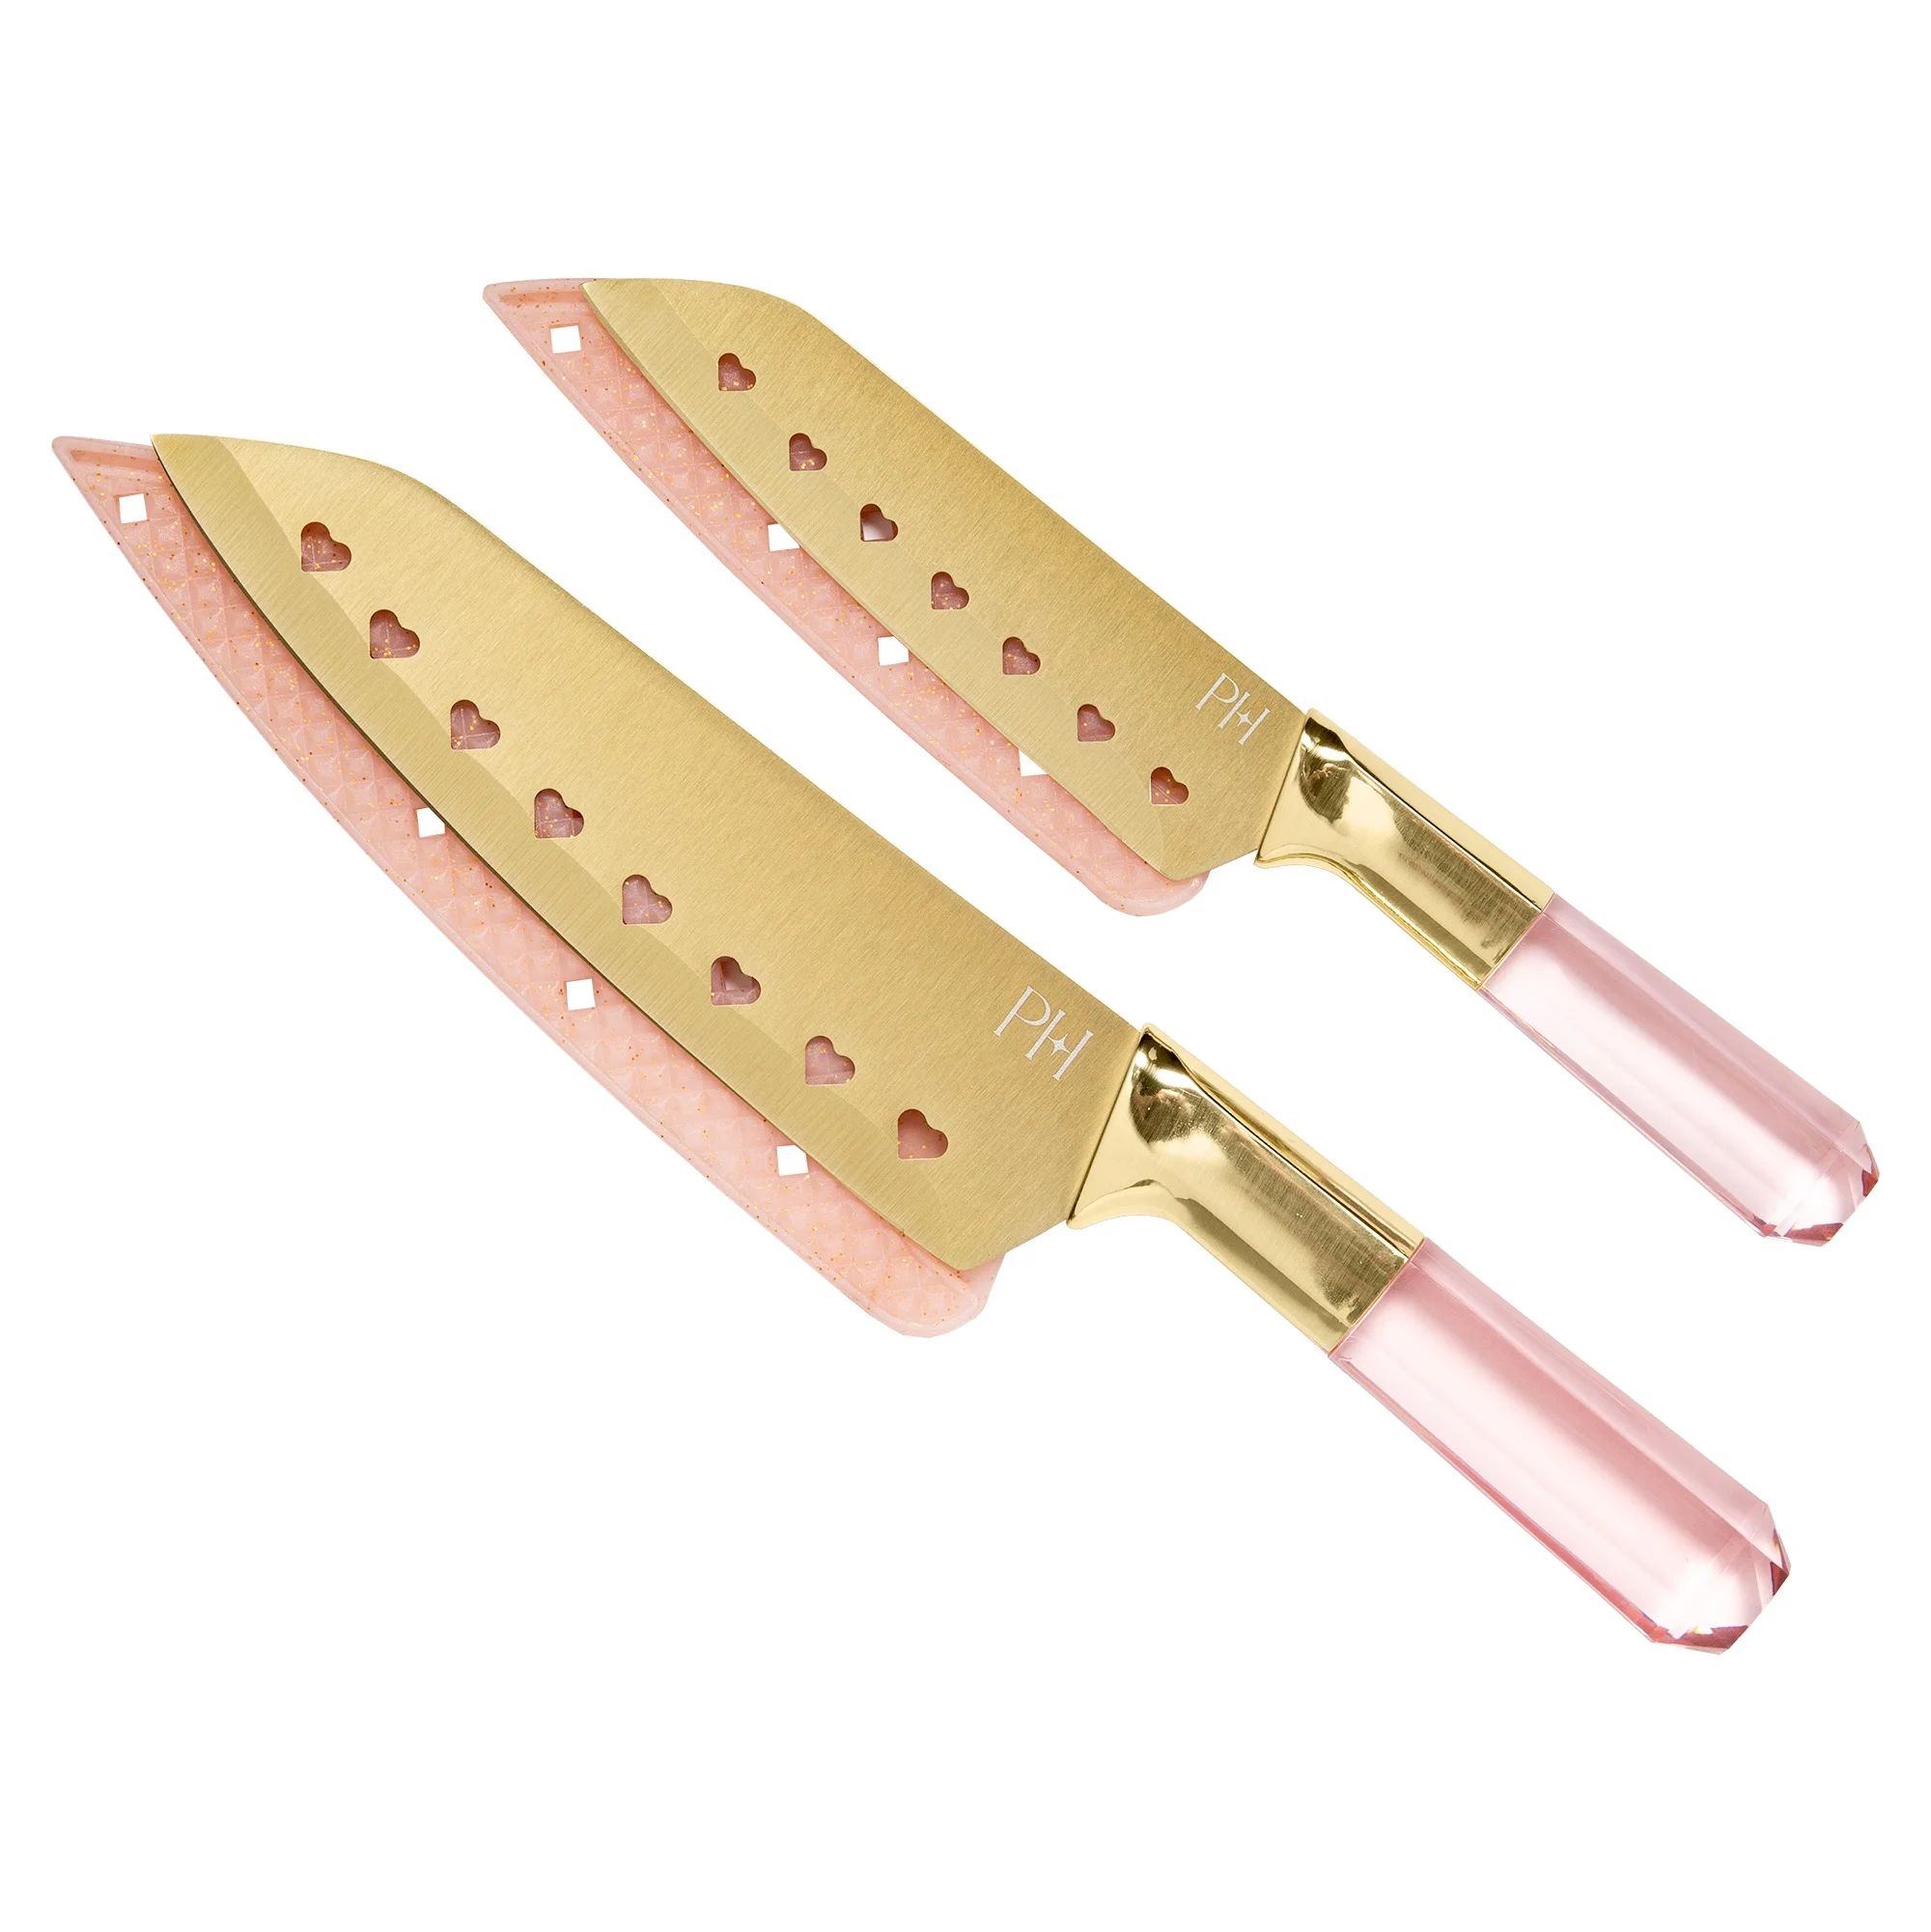 Paris Hilton 2 Piece Stainless Steel Santoku Knife Set, Jewel Handles, Gold Blades, Pink | Walmart (US)